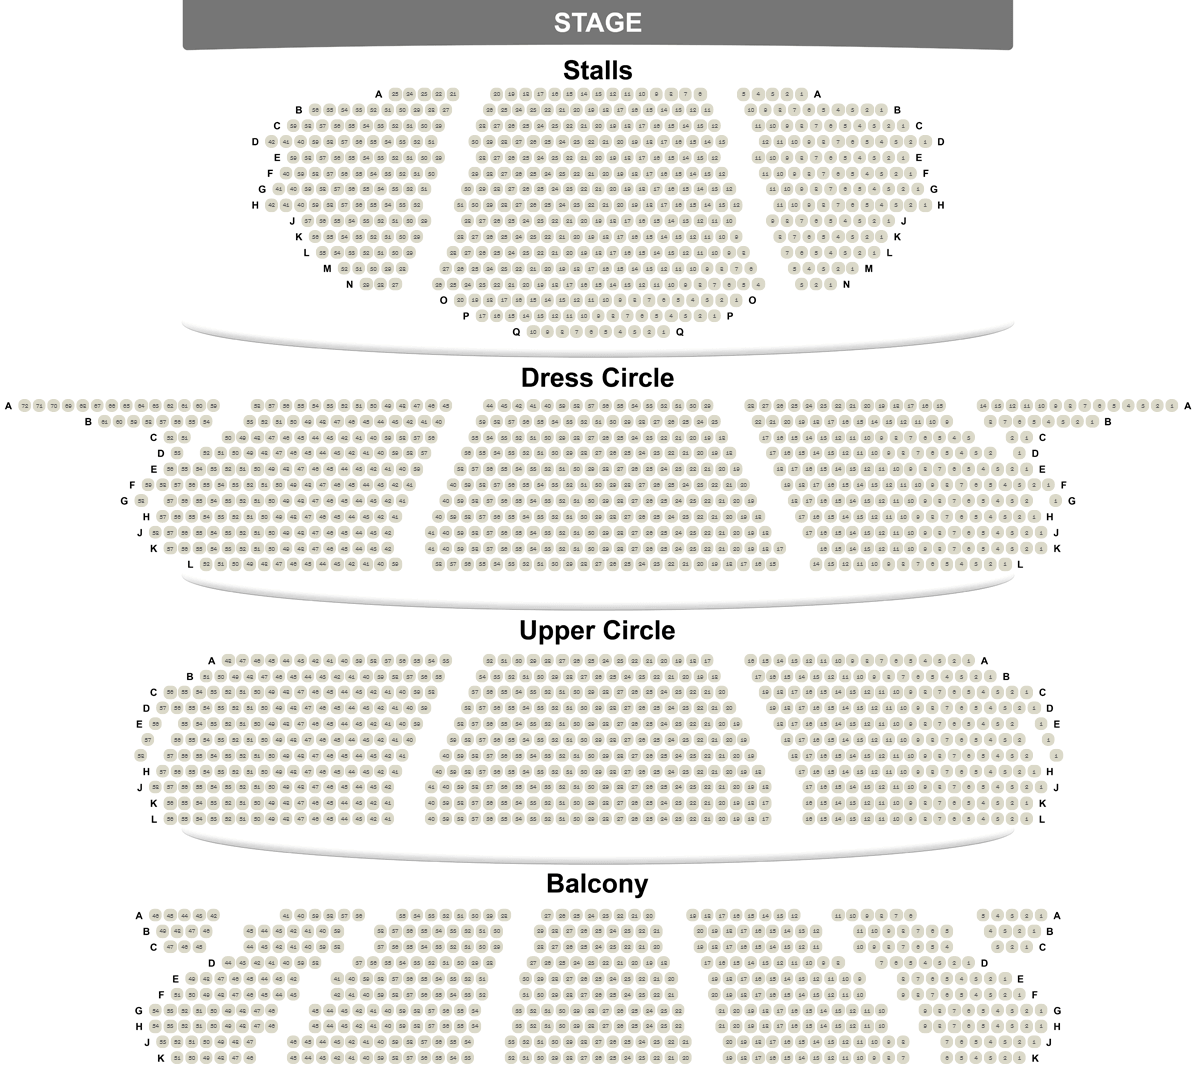 The London Coliseum seating plan